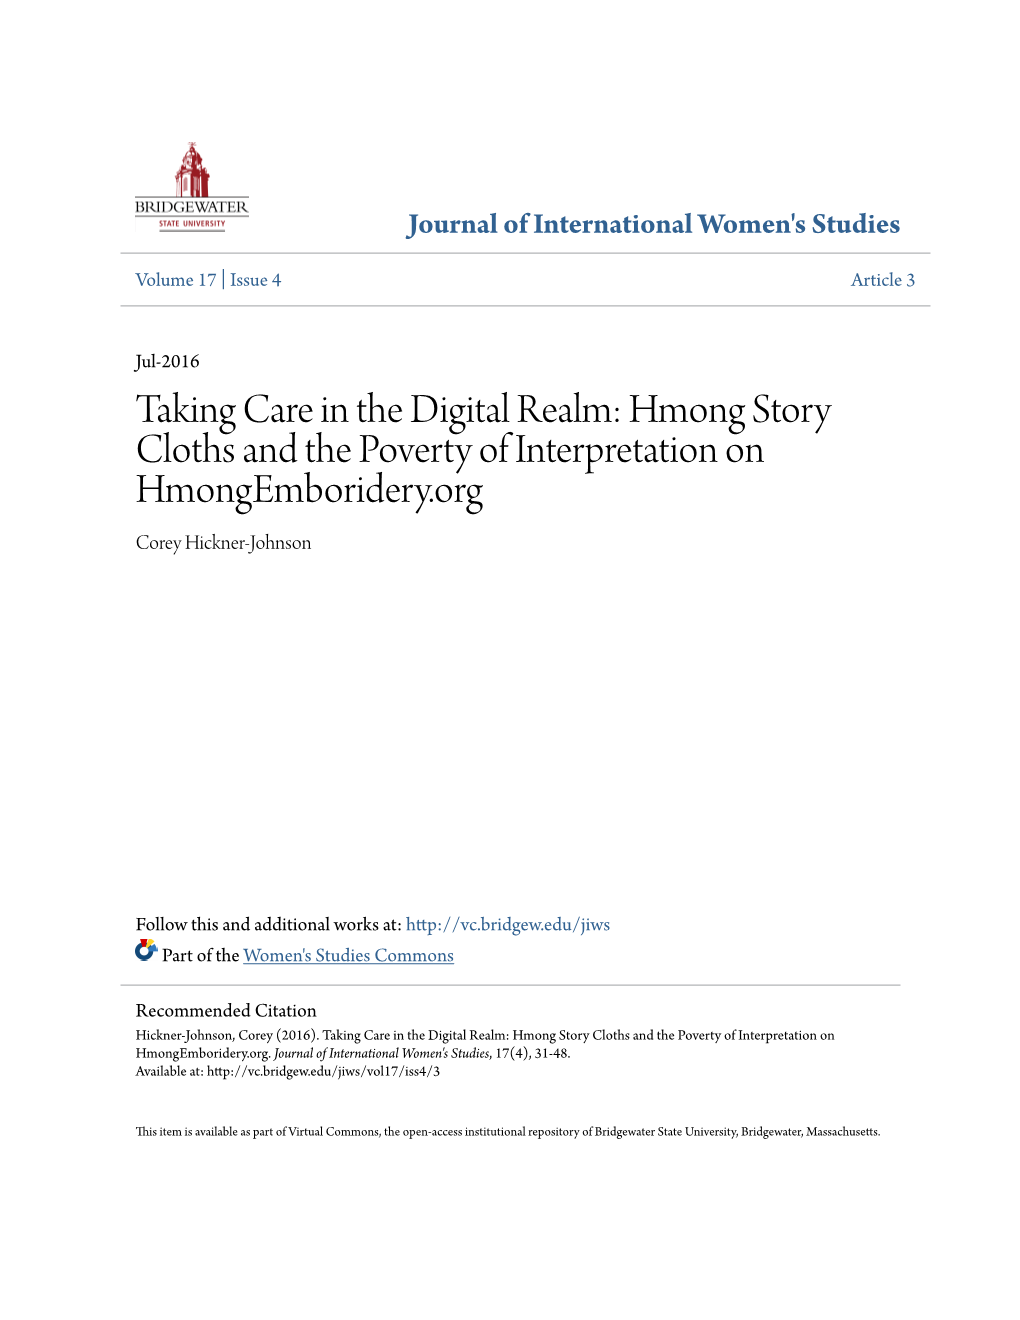 Hmong Story Cloths and the Poverty of Interpretation on Hmongemboridery.Org Corey Hickner-Johnson